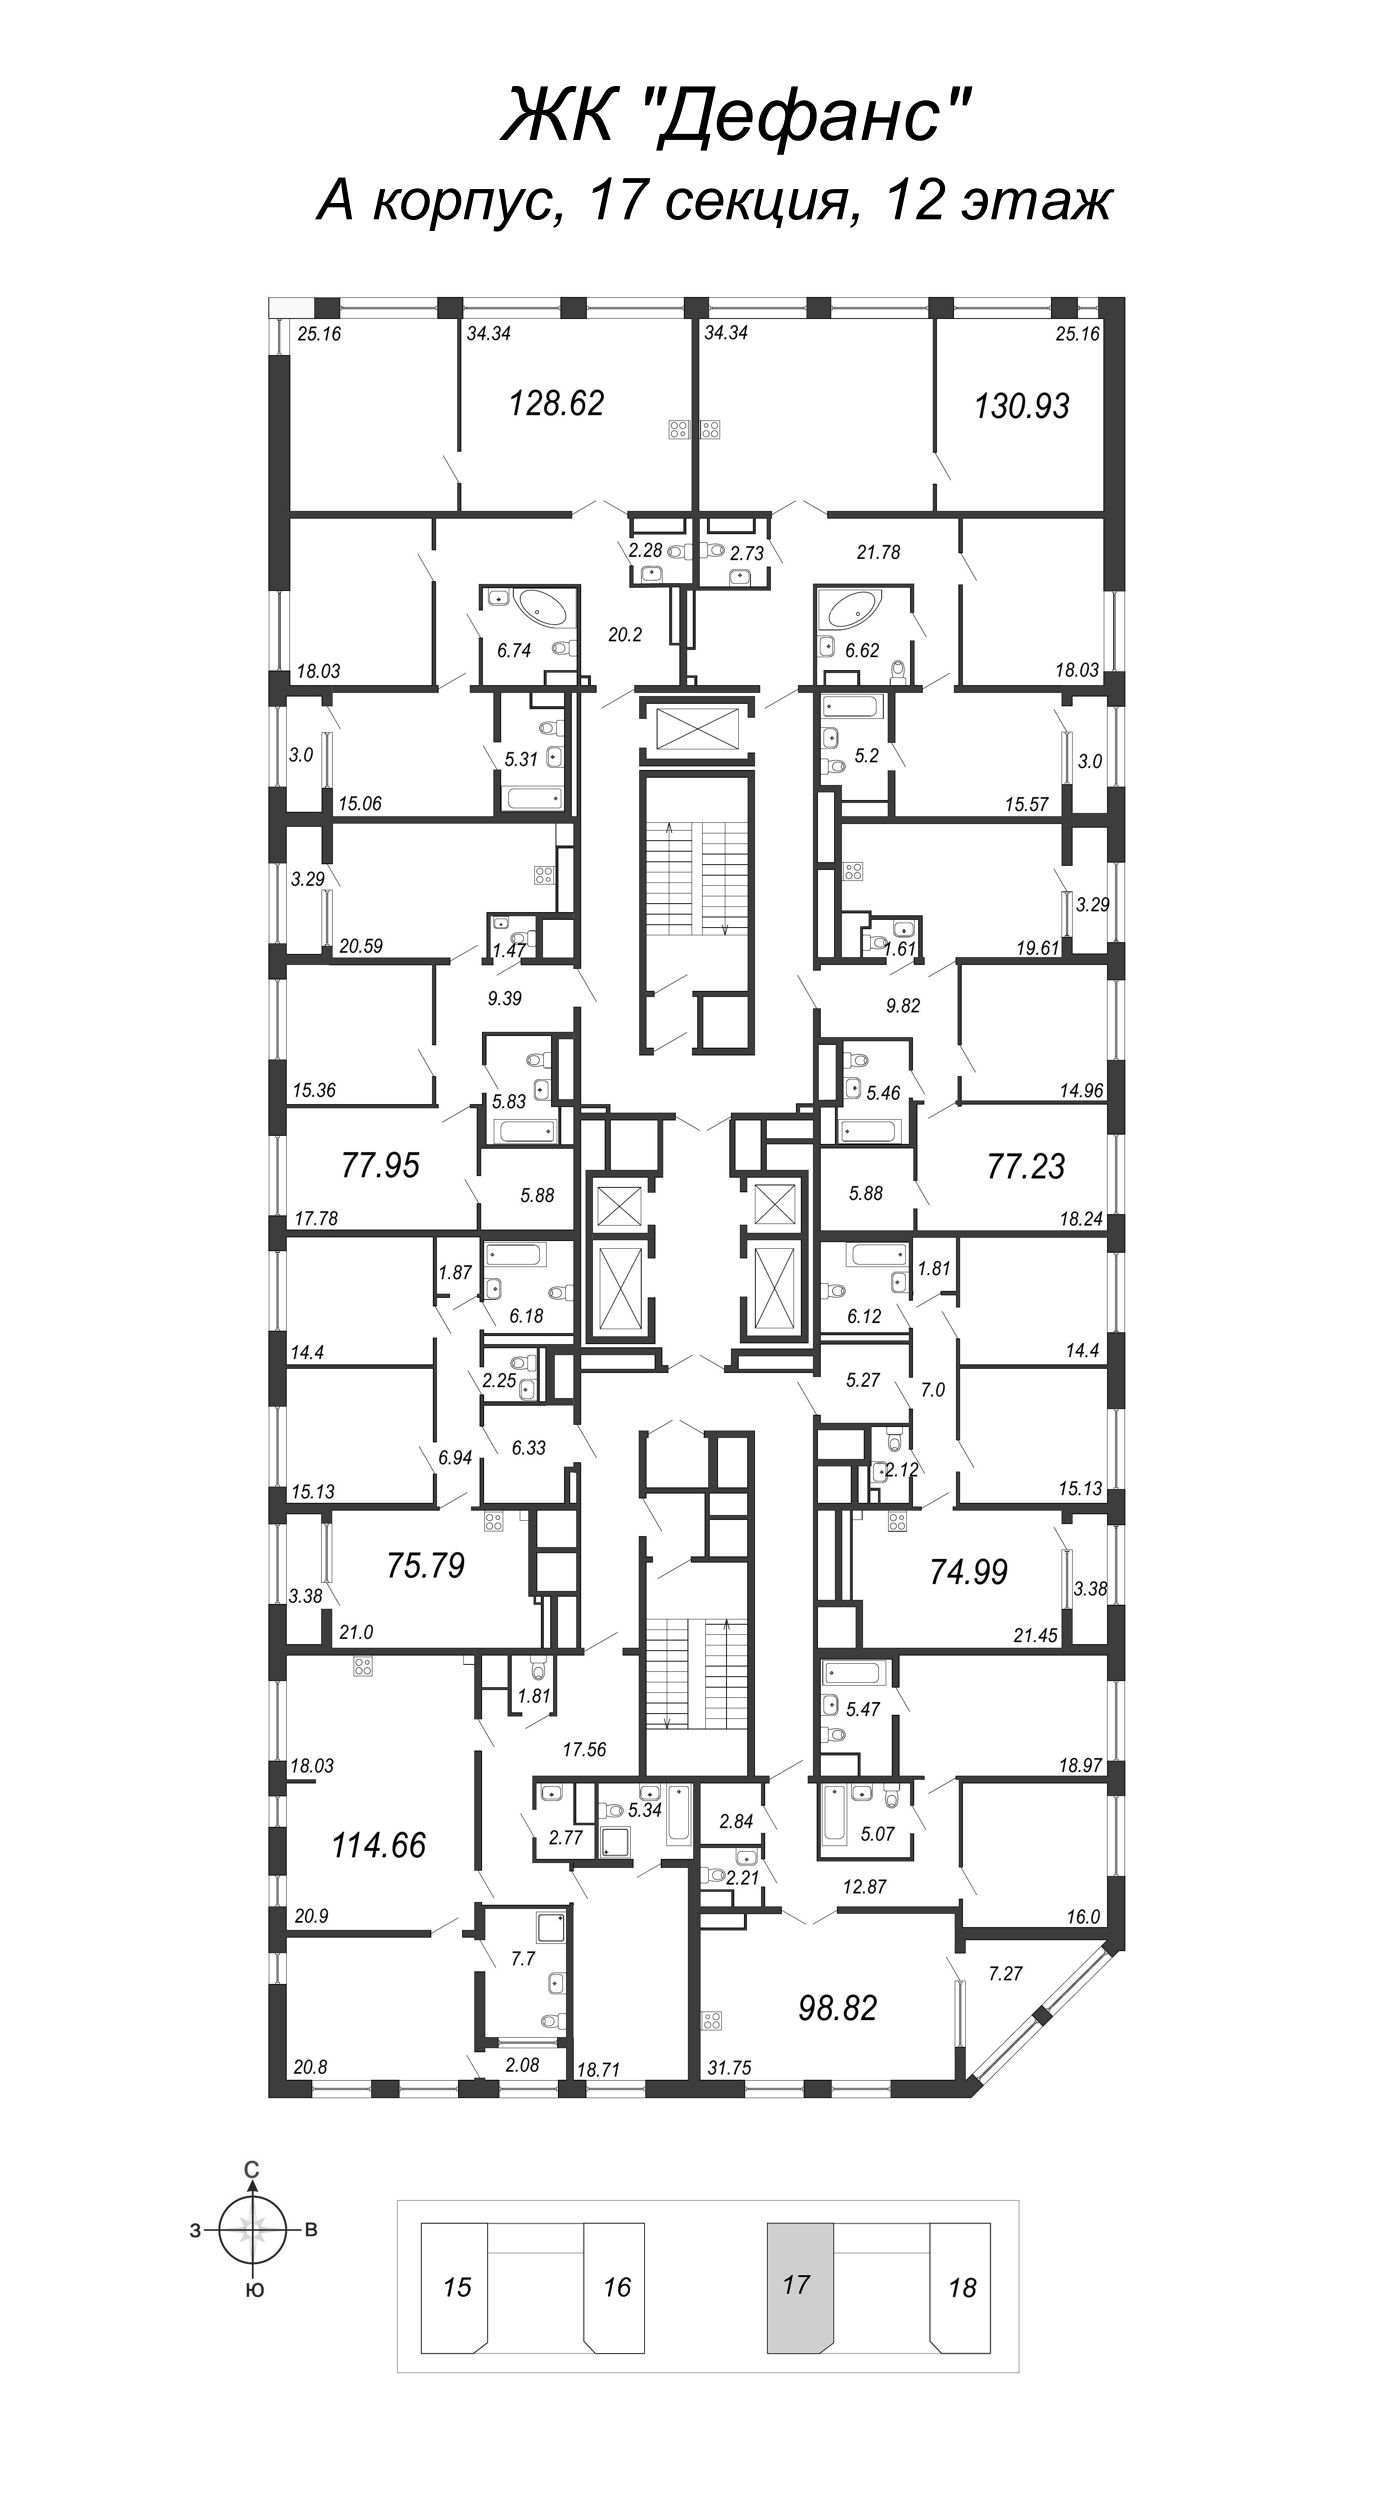 3-комнатная (Евро) квартира, 77.23 м² - планировка этажа